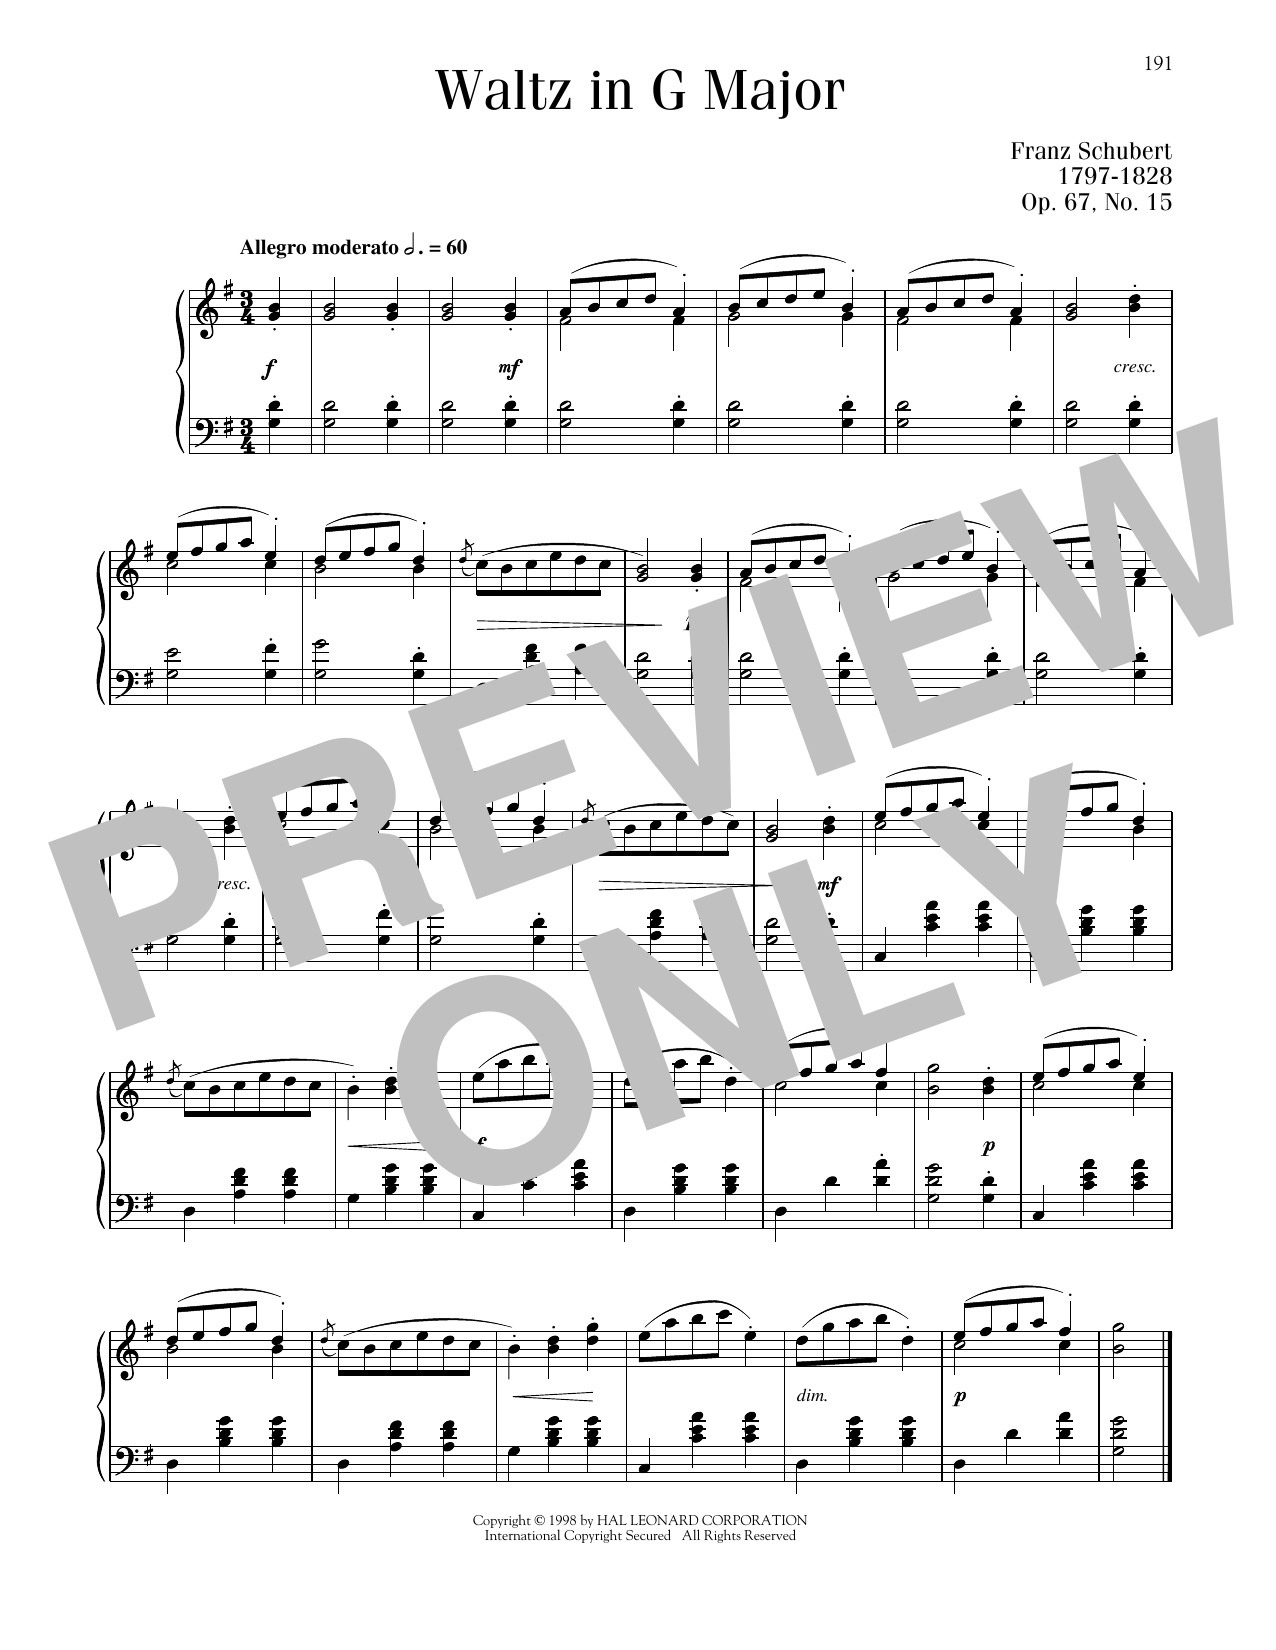 Franz Schubert Waltz In G Major, Op. 67, No. 15 sheet music notes printable PDF score